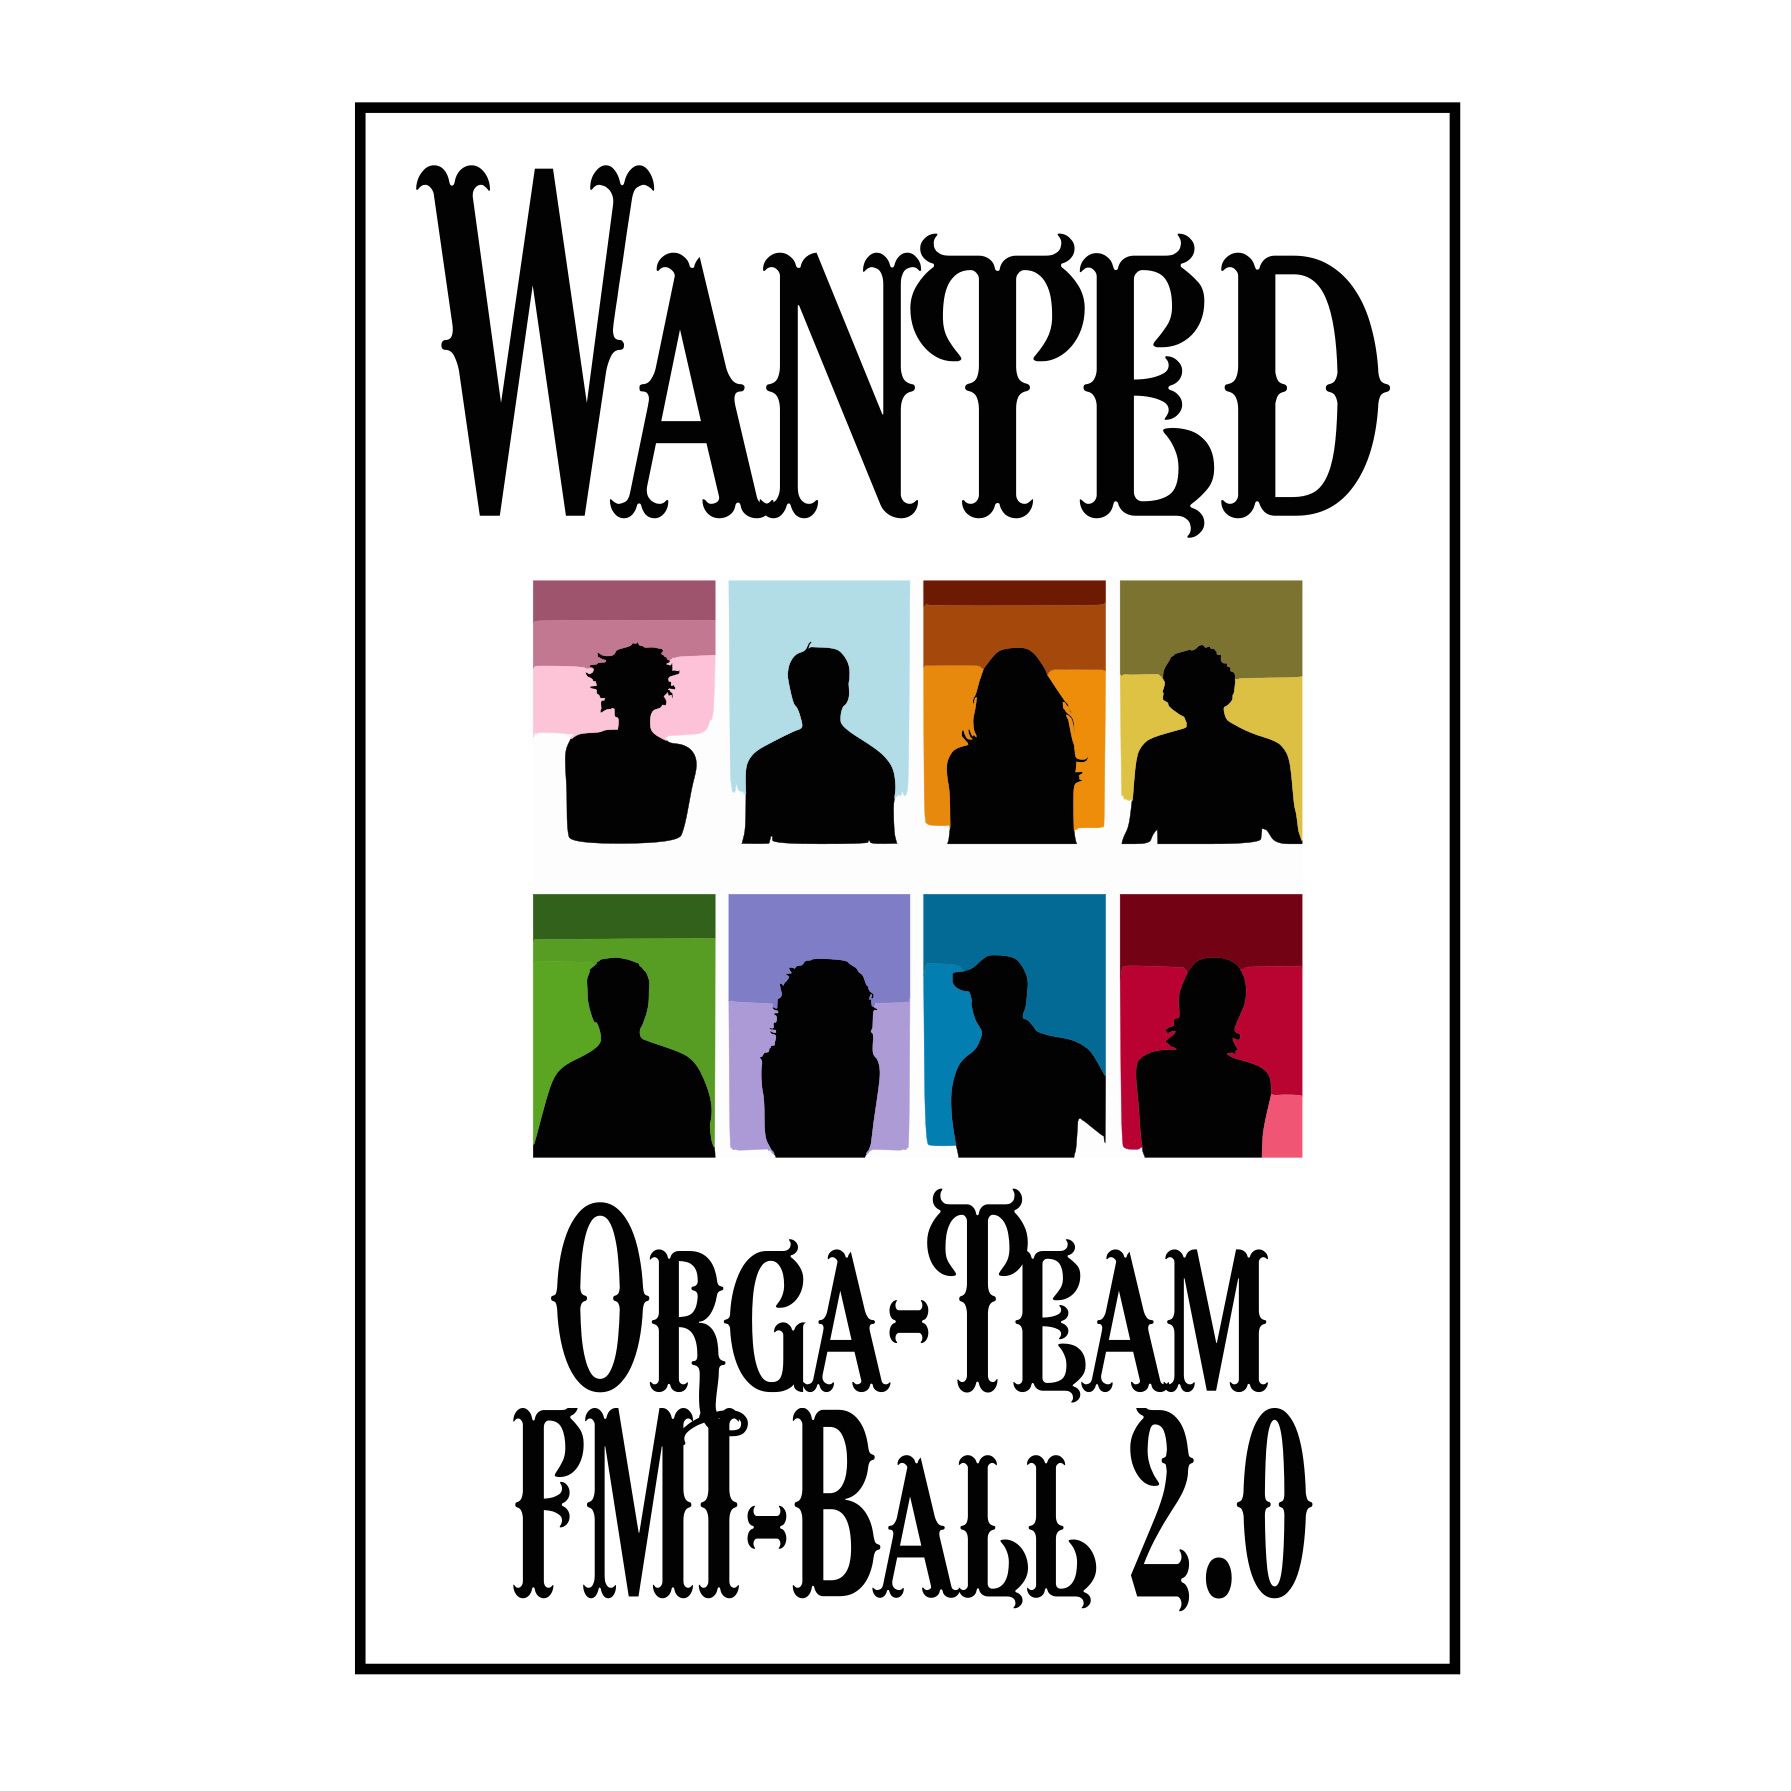 FMI-Ball Orga wanted